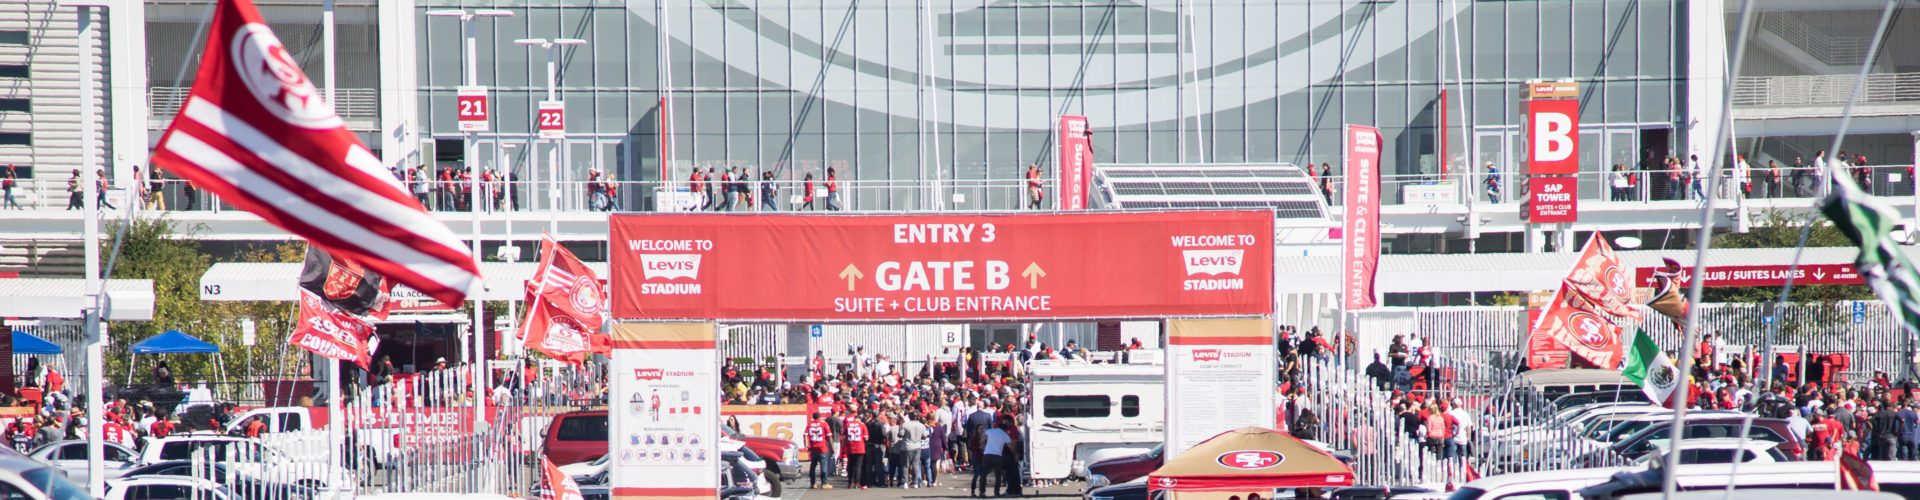 San Francisco 49ers Levis Stadium Event Truss 00